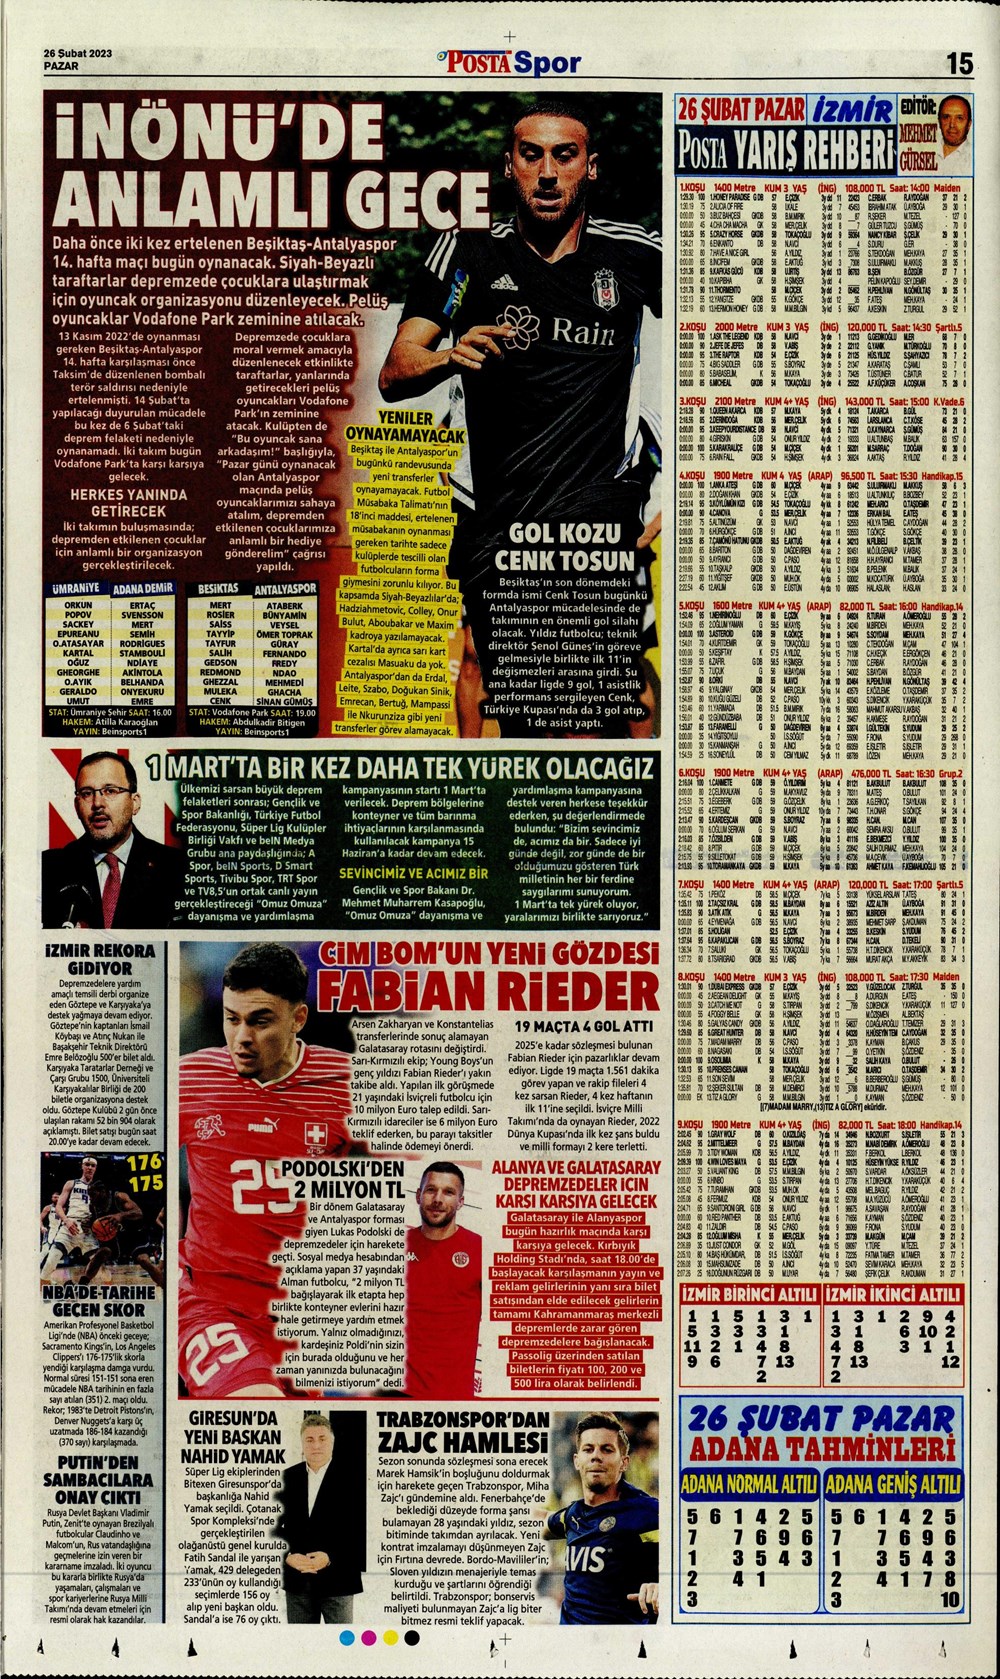 "Valenci'ağa' böyle istedi" - Sporun manşetleri  - 24. Foto